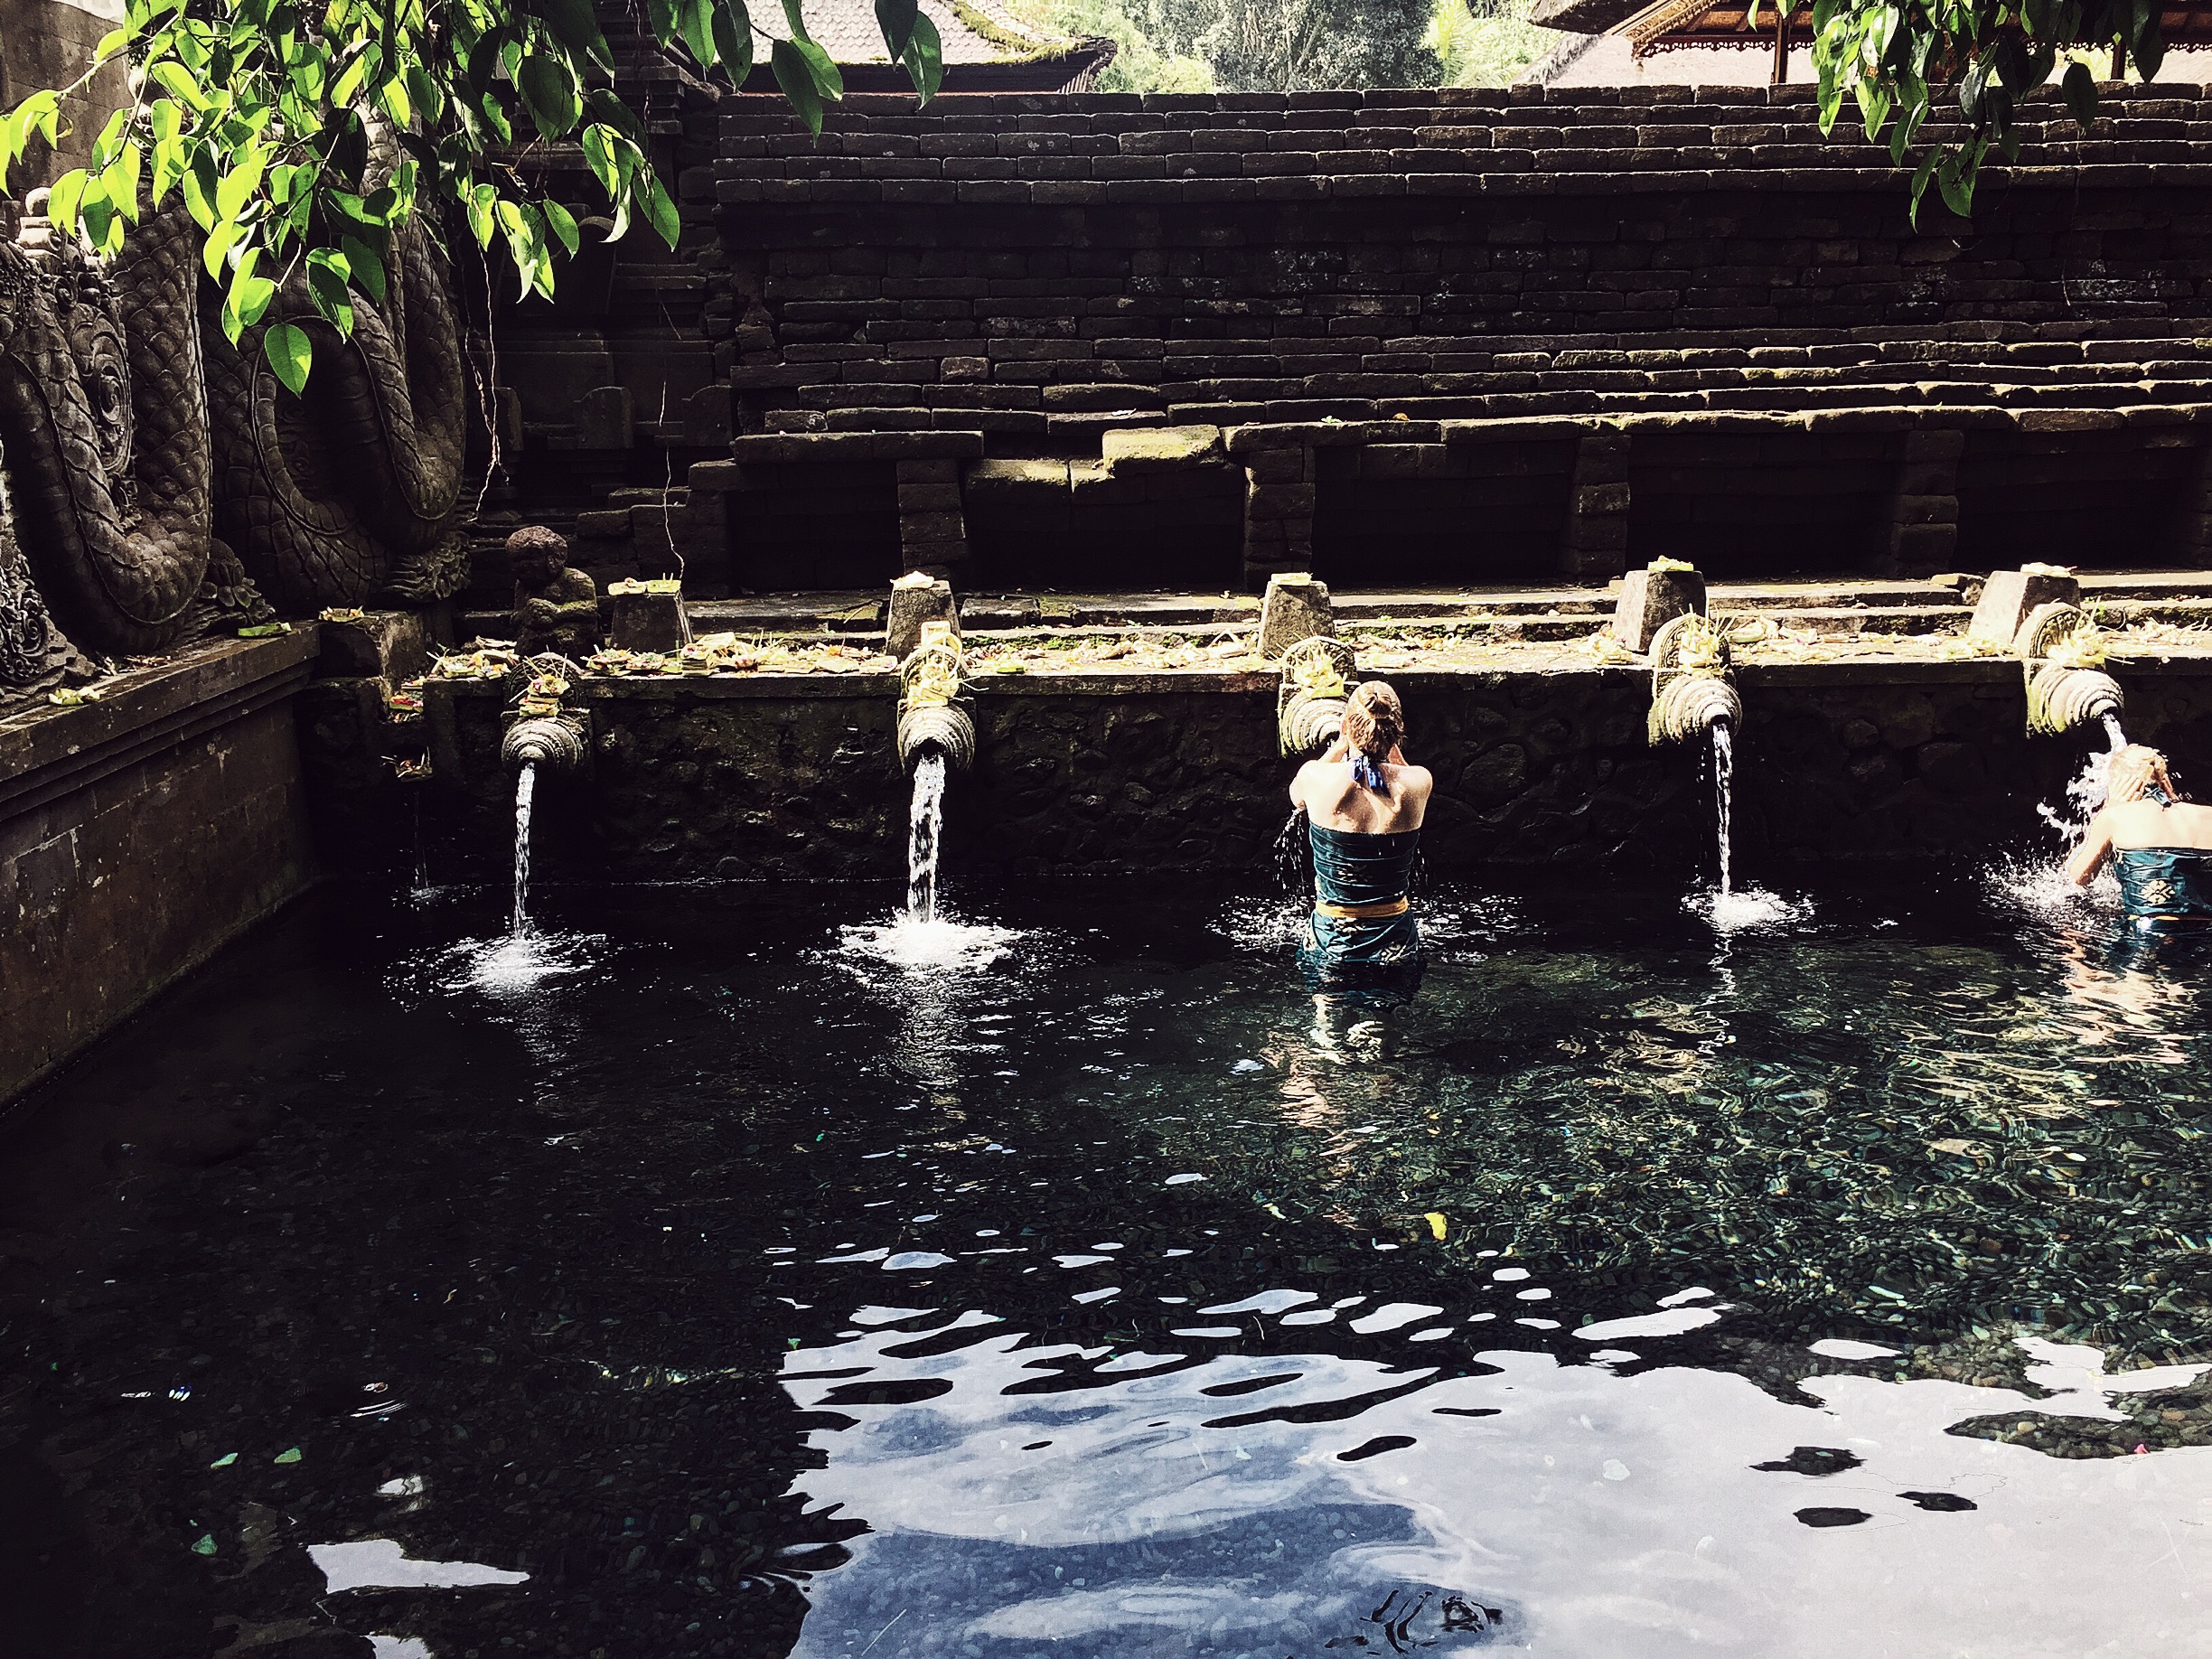 Tirta Empul in Bali